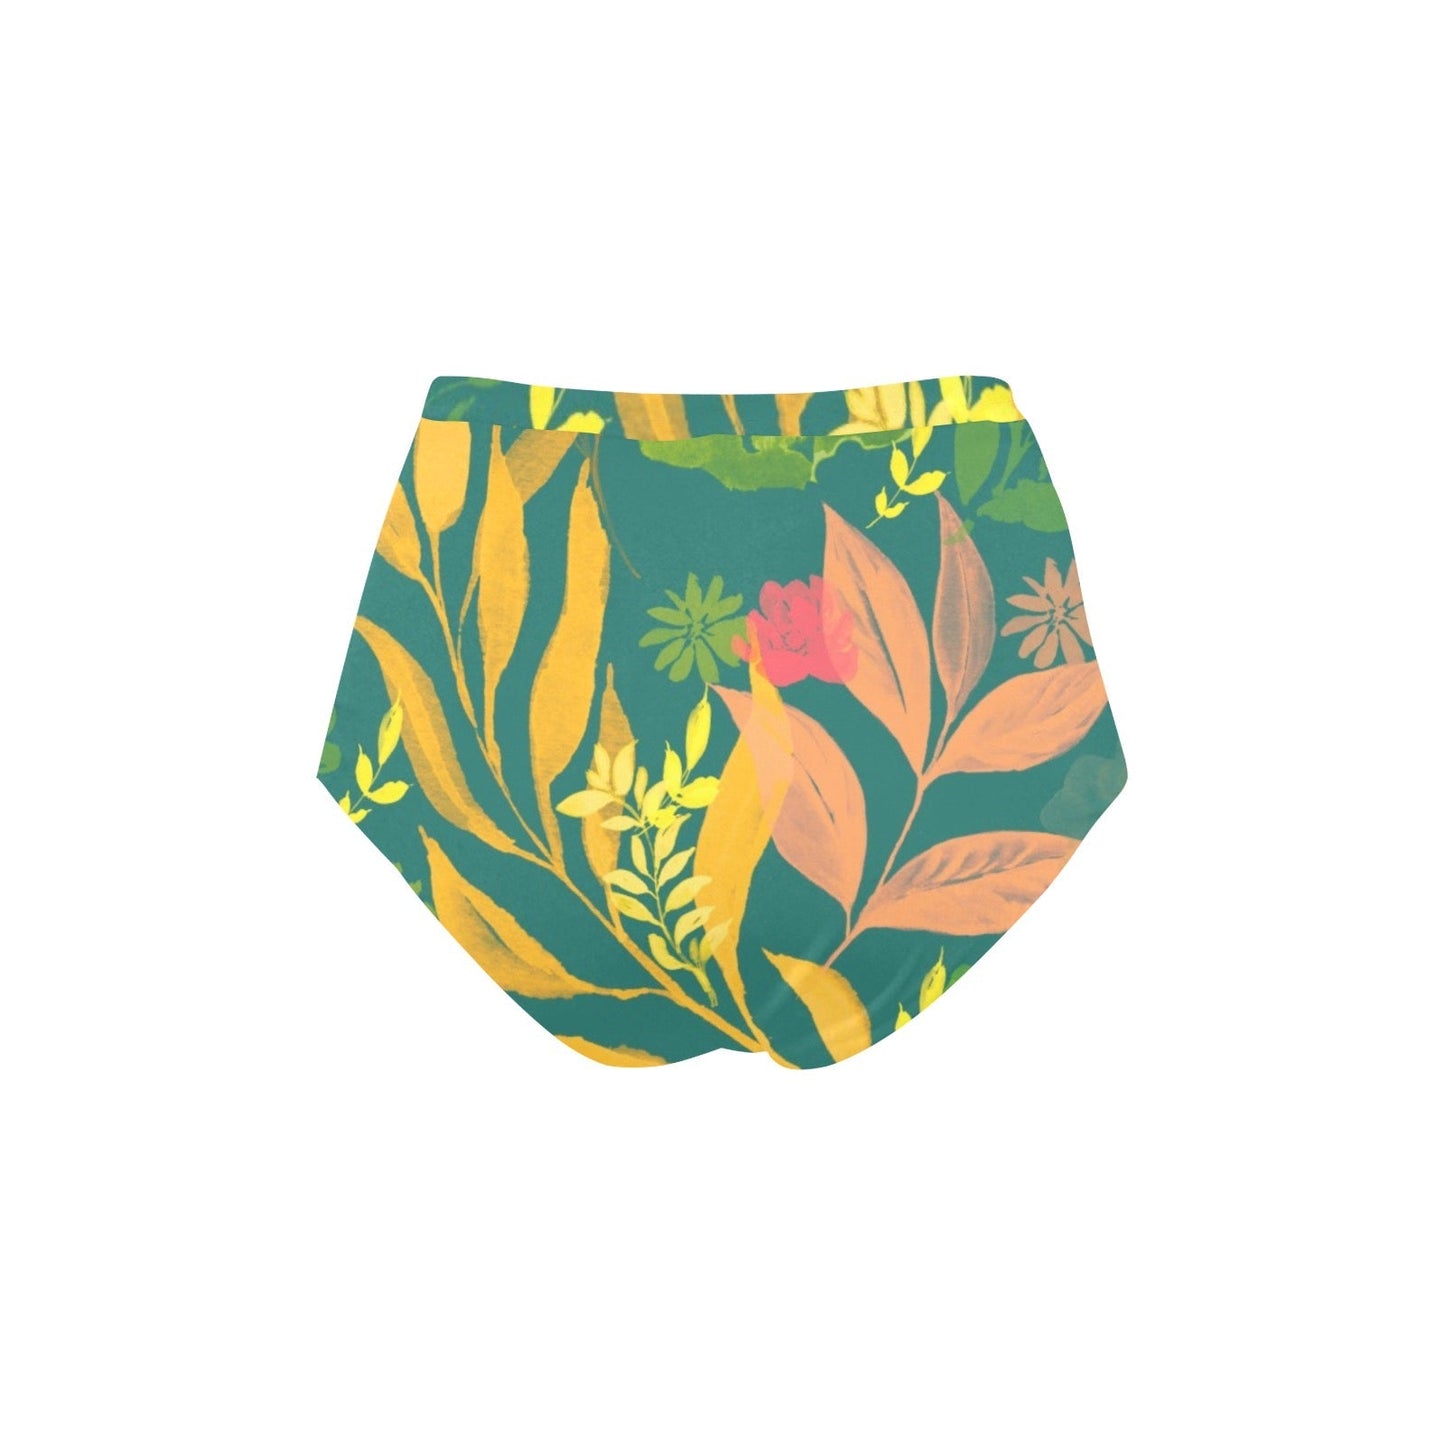 Multicolor Flowers Green High-Waisted Bikini Bottom. Design hand-painted by the Designer Maria Alejandra Echenique